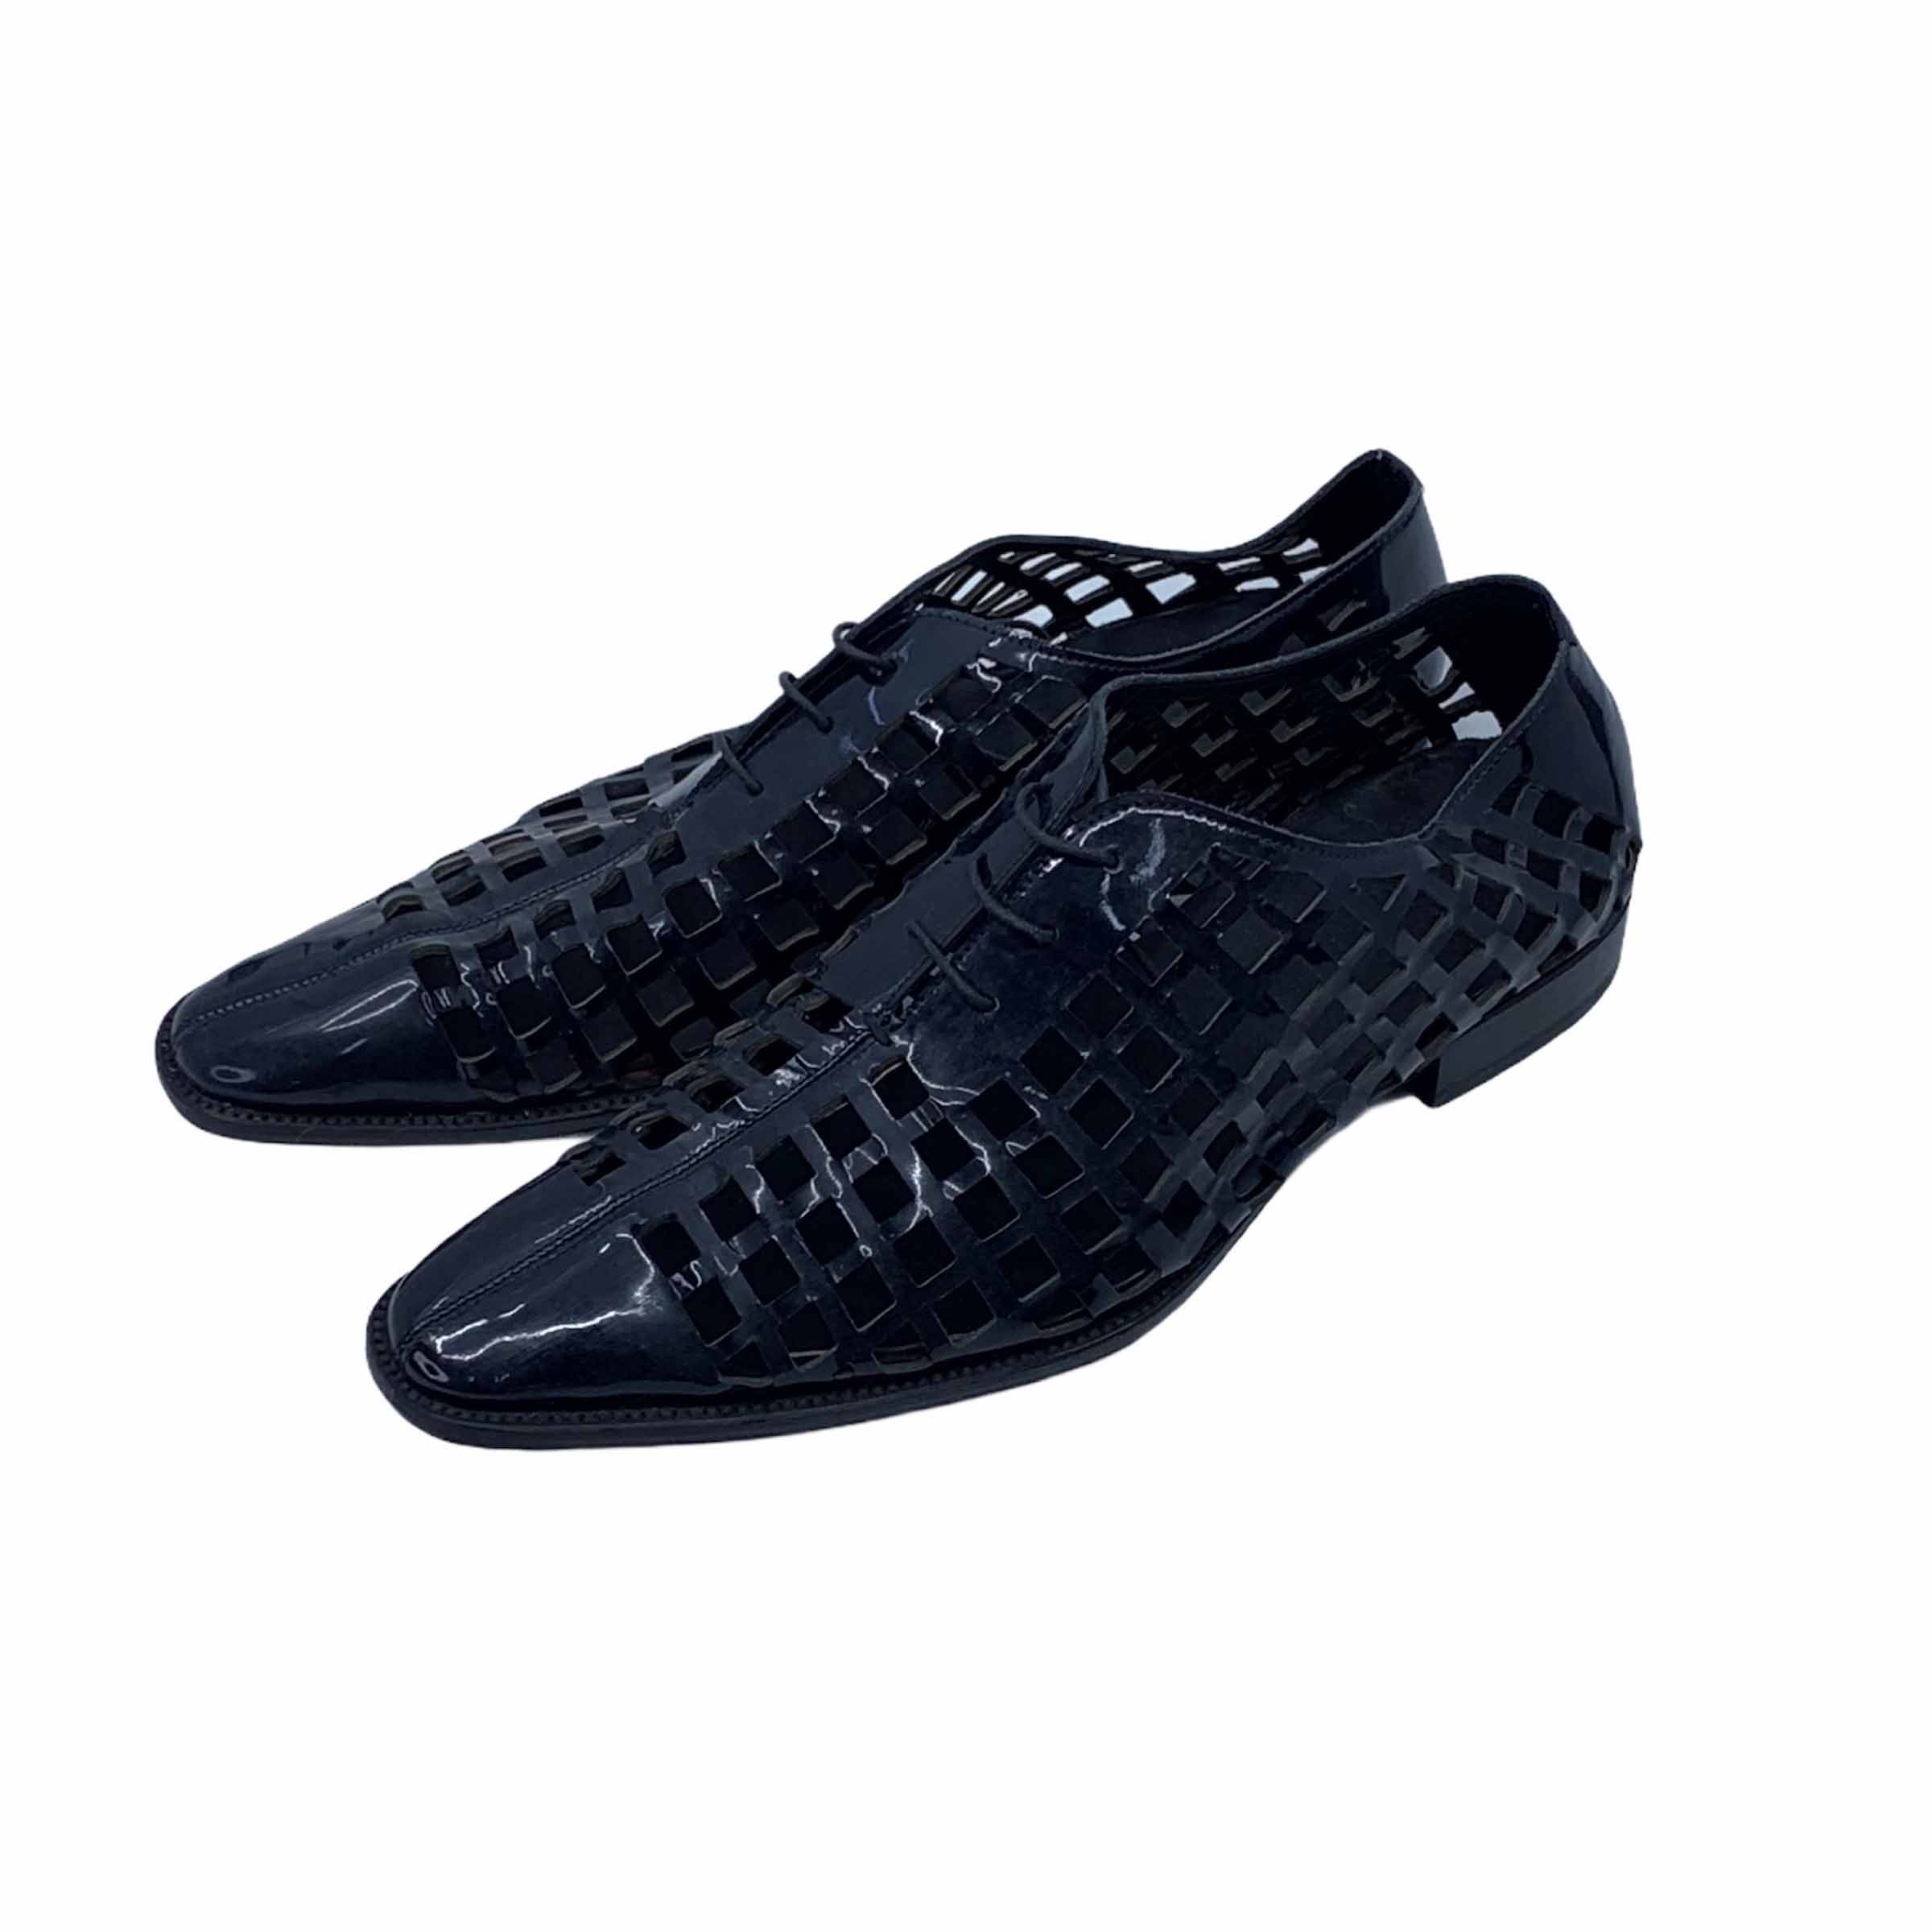 [Dior] Black Fishnet Leather Dress Shoes - Size EUR42